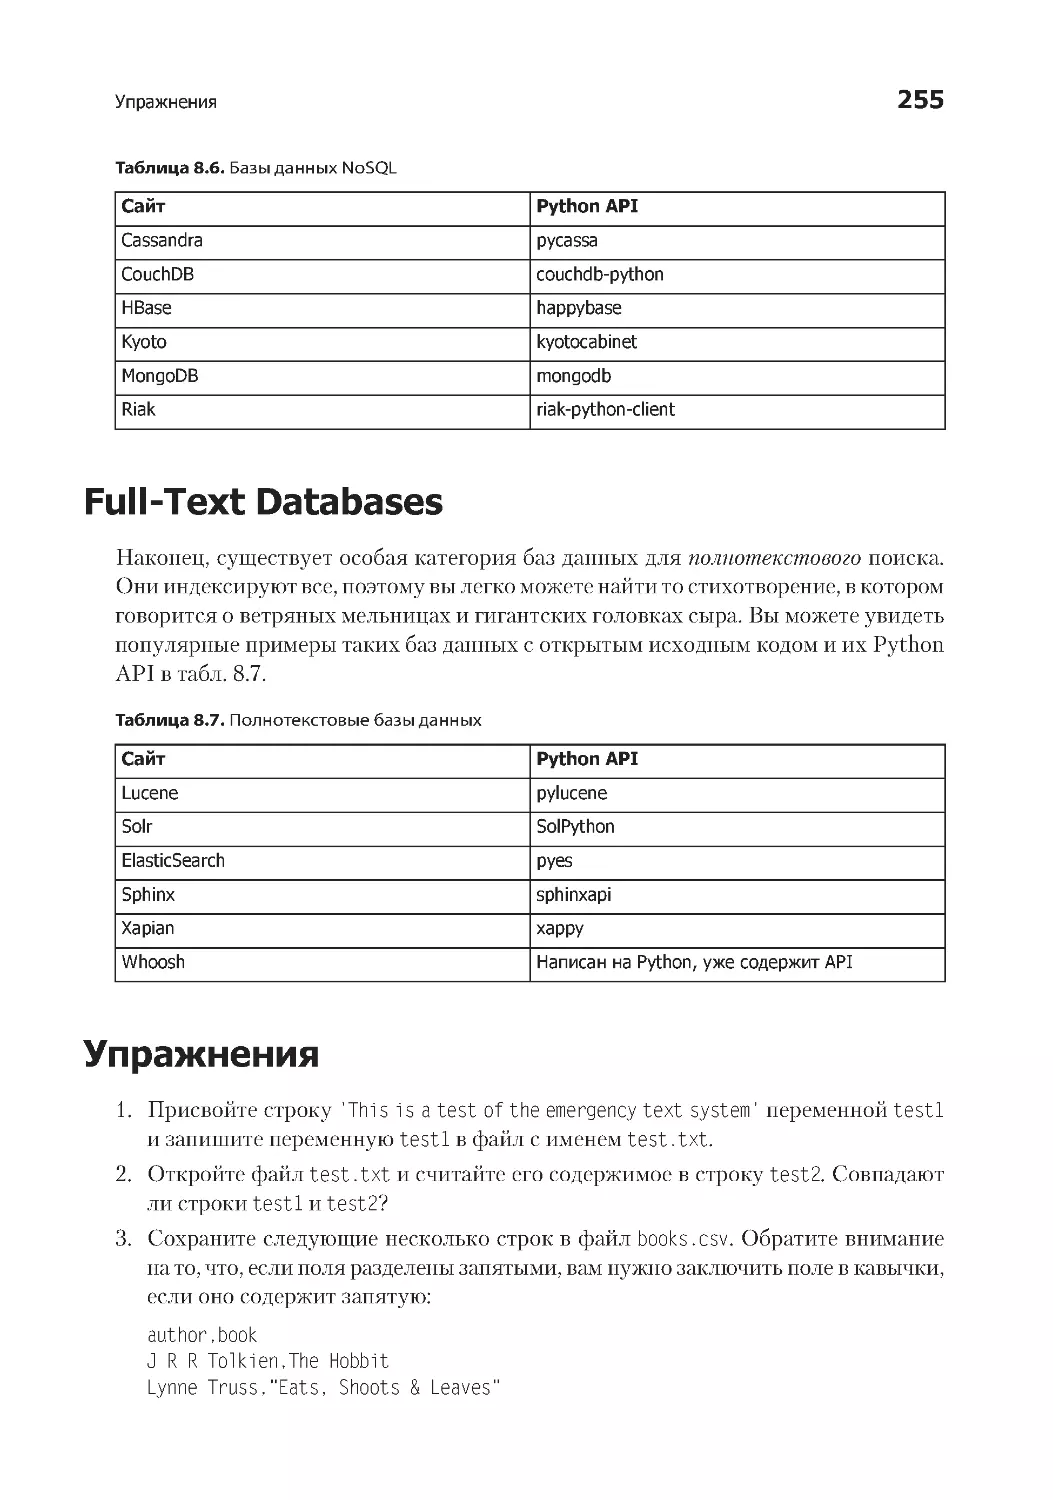 Full-Text Databases
Упражнения